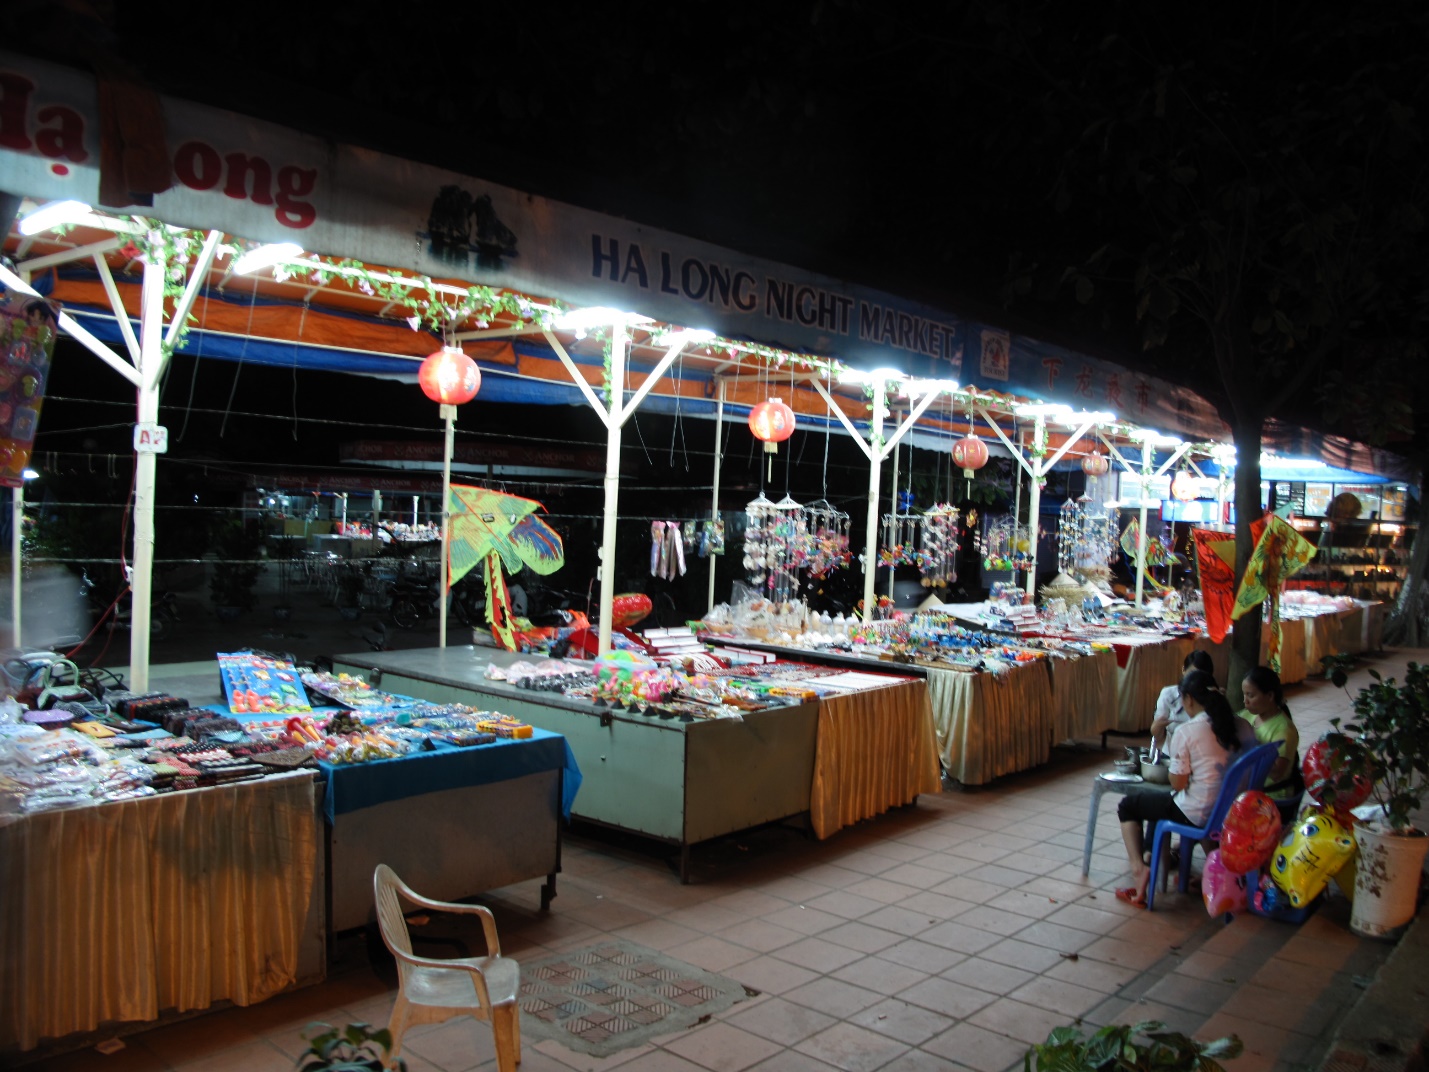 A corner of Halong night market